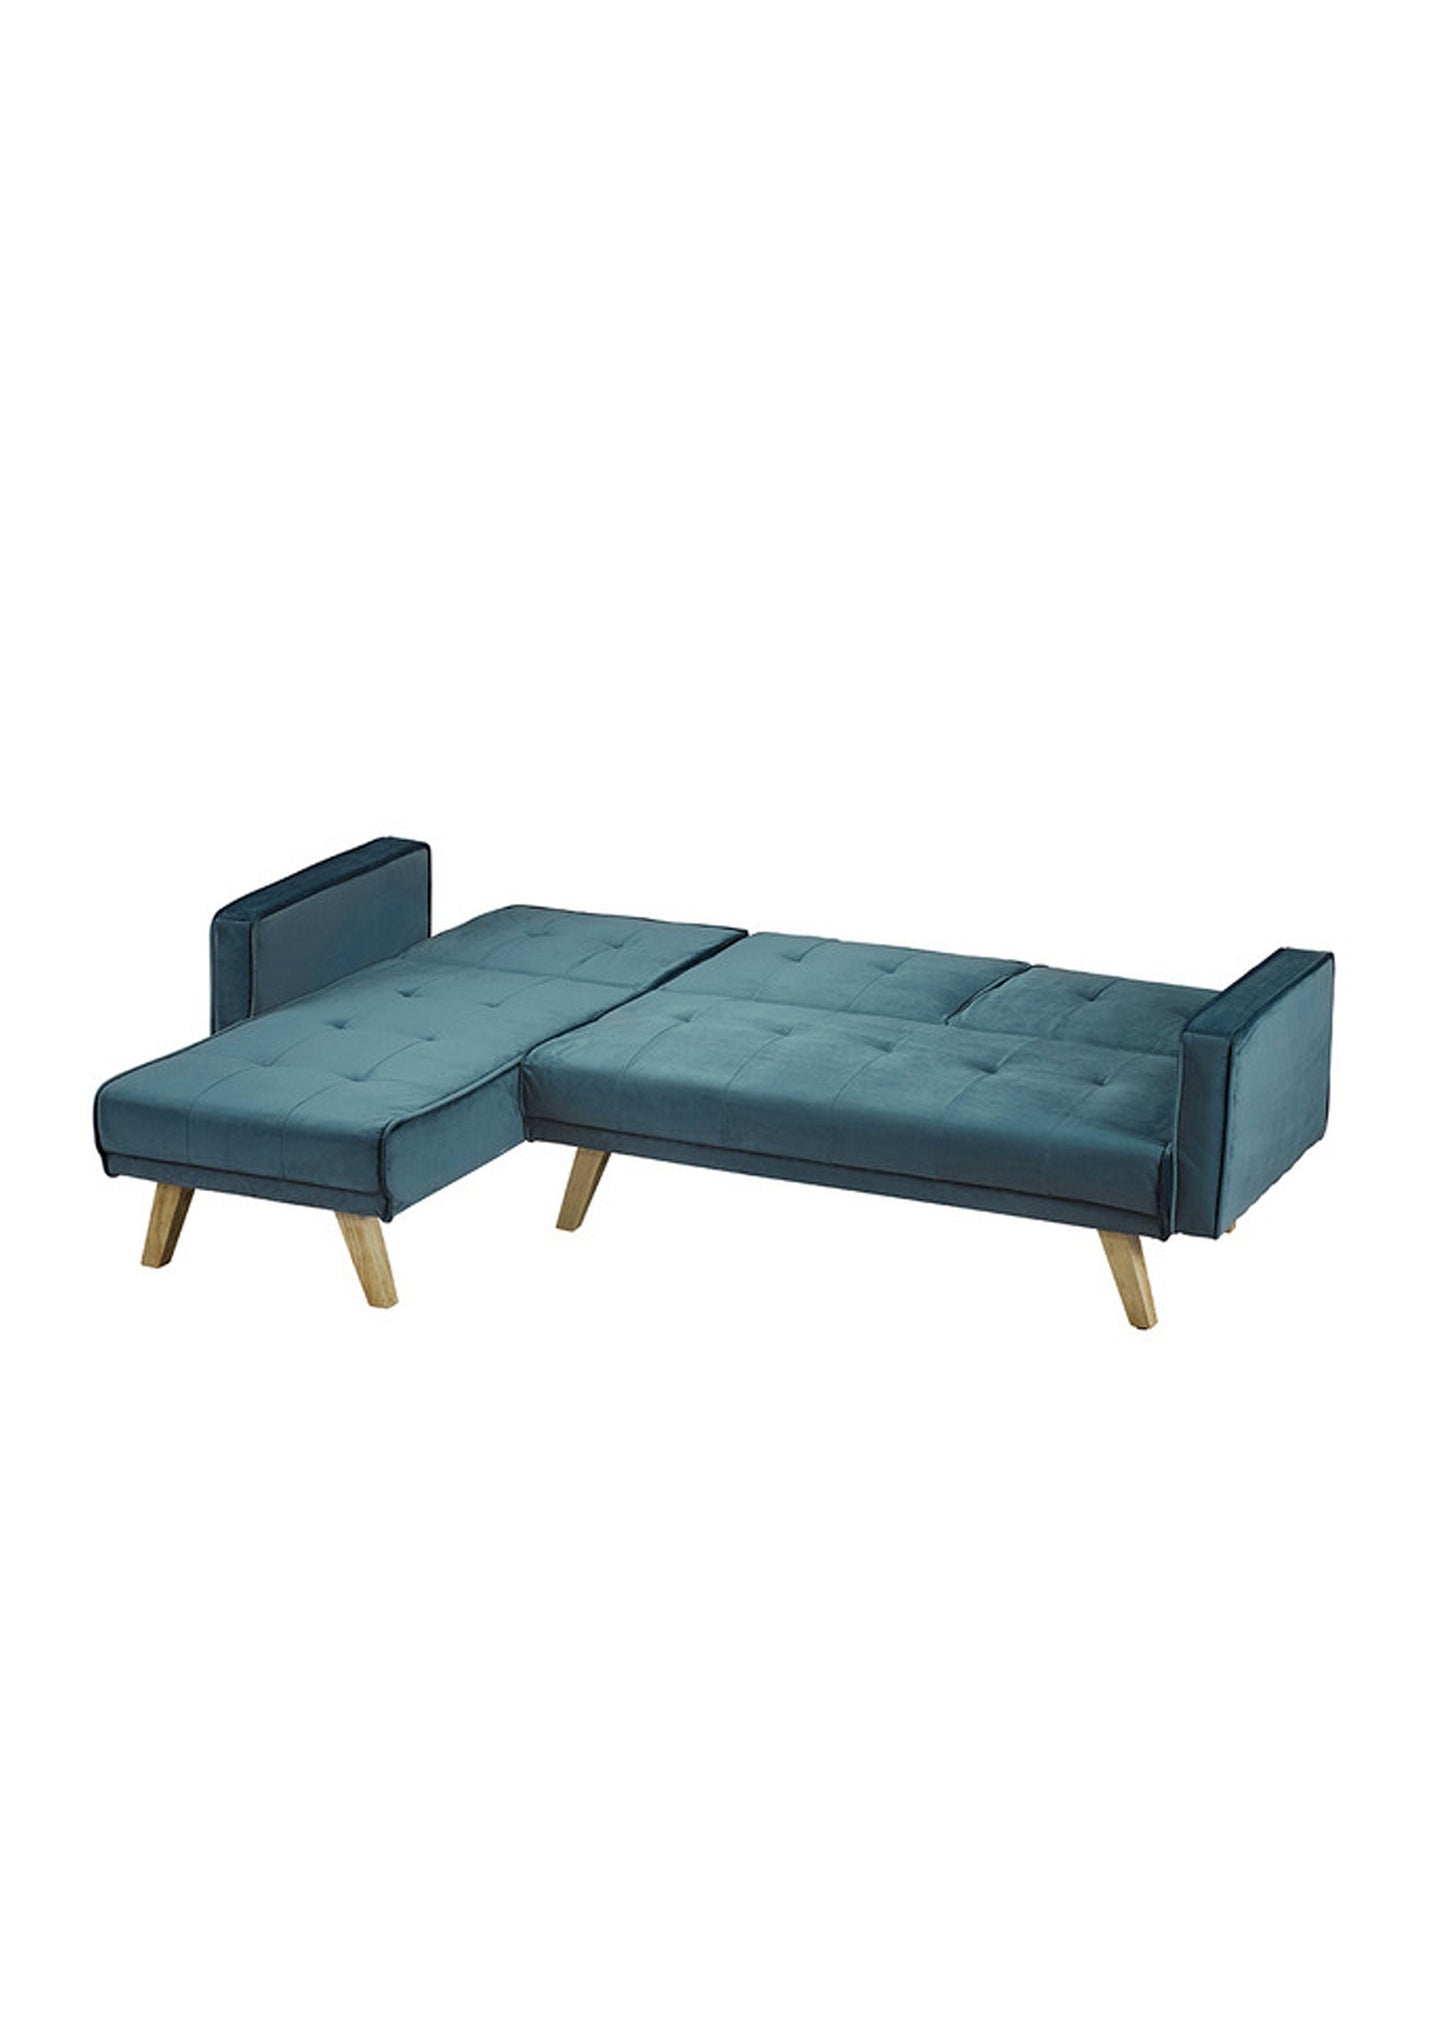 Three Seater Corner Sofa Bed in Teal Velvet Scandi Style